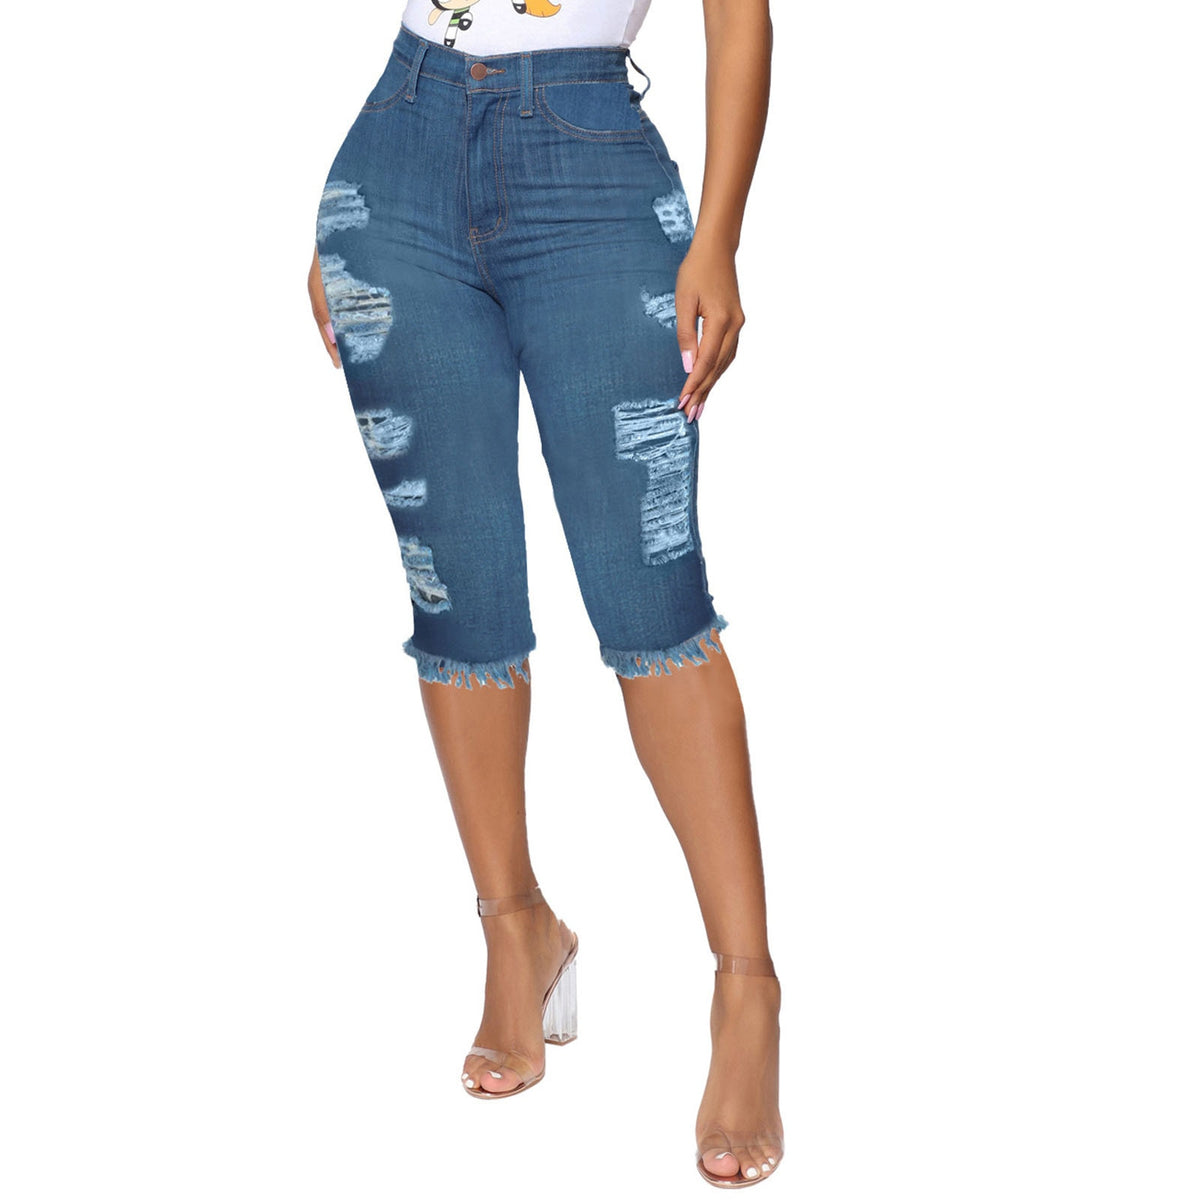 Women Stretch Short Jeans Fashion Casual Slim Fit High Quality Elastic Summer Denim Shorts Male Brand Clothes Short de mezclilla